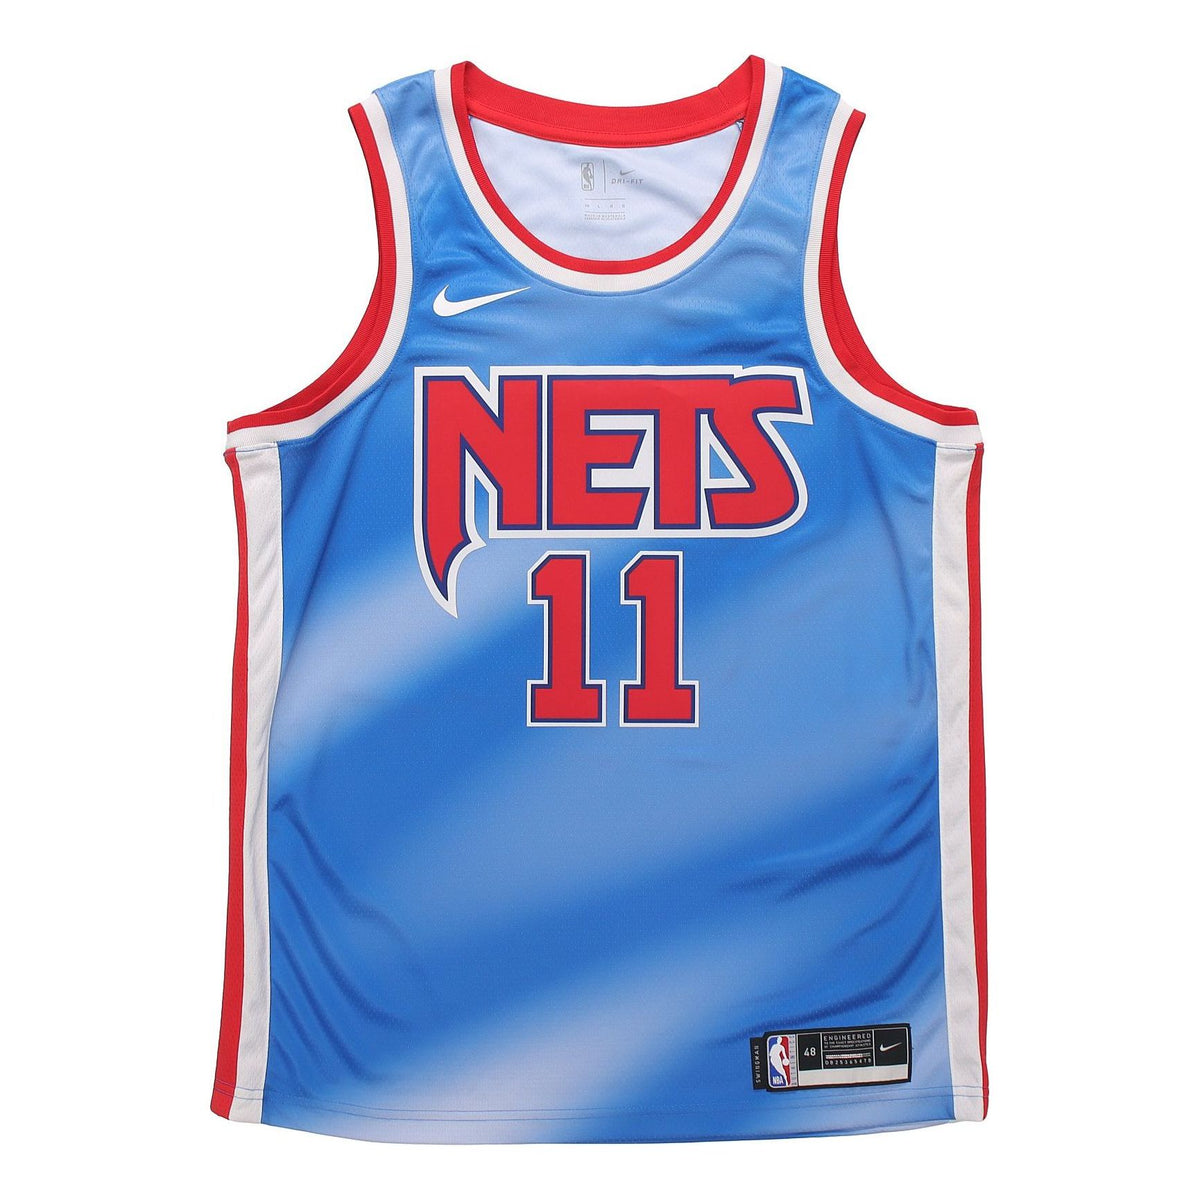 Nike Men's Brooklyn Nets NBA City Swingman Shorts - Blue, Size: Large